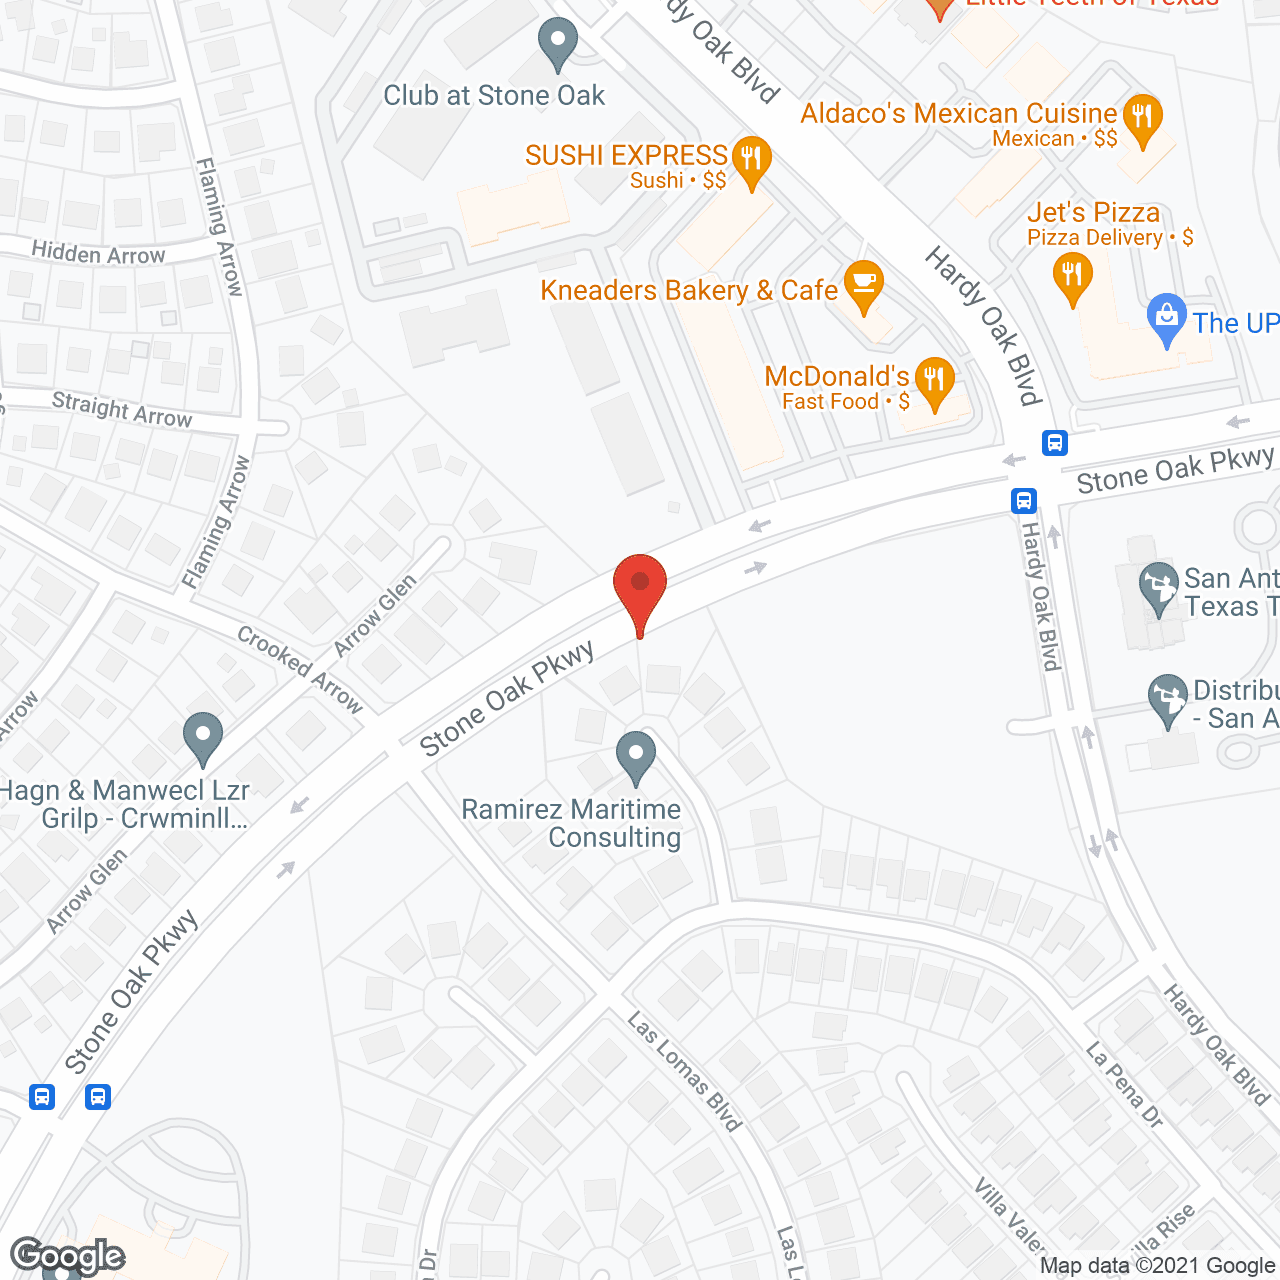 Coronado at Stone Oak in google map